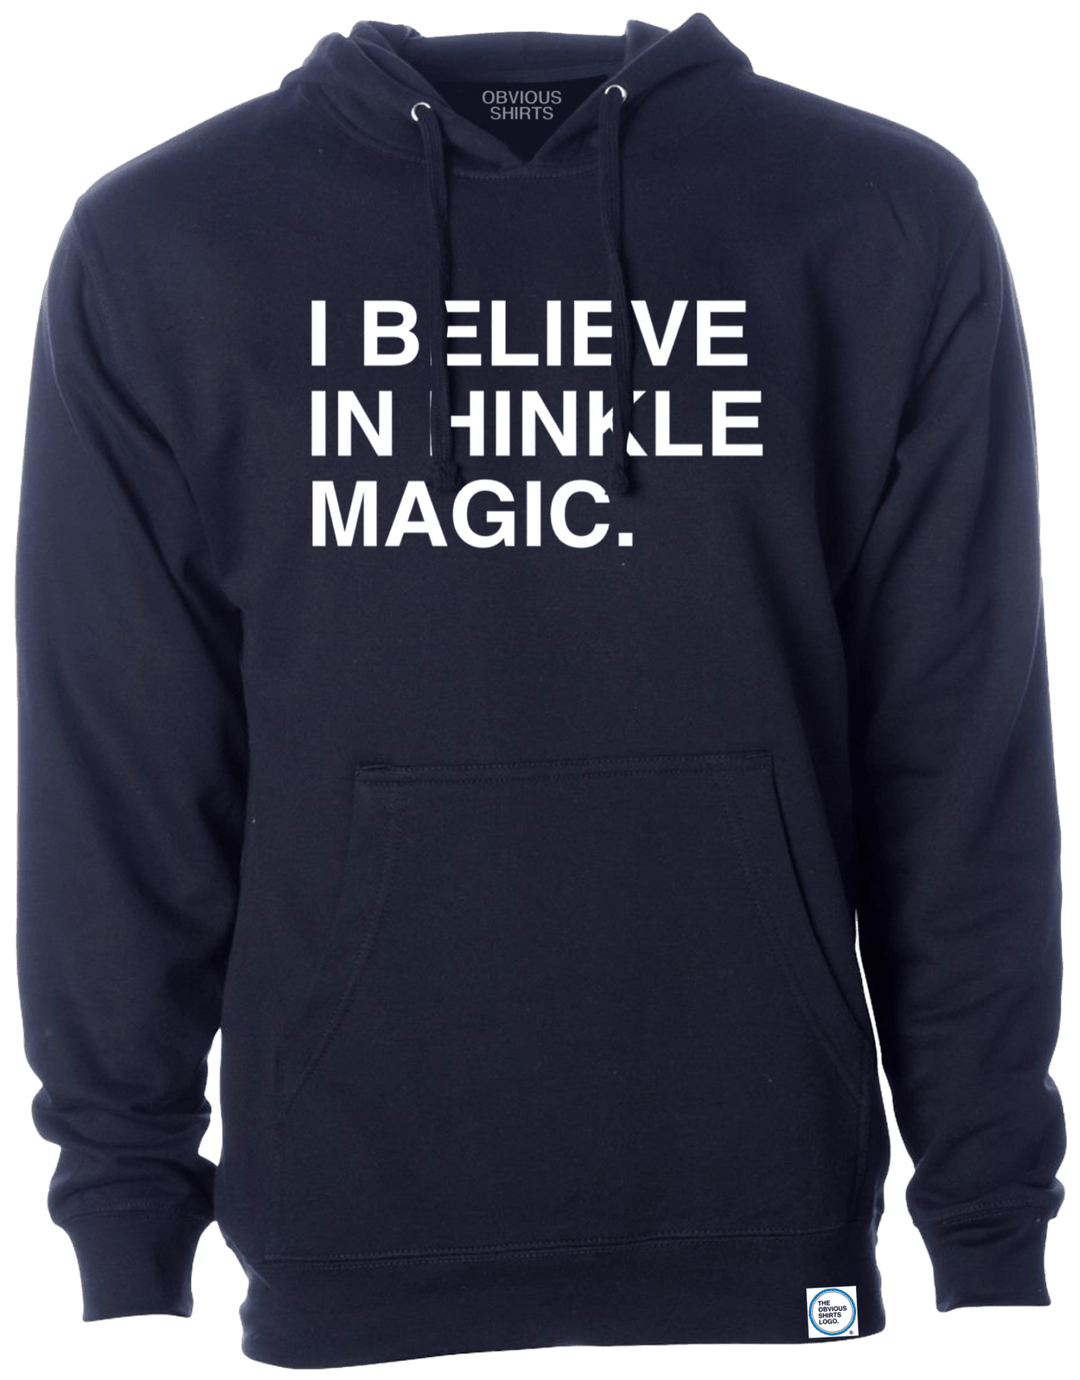 I BELIEVE IN HINKLE MAGIC. (HOODED SWEATSHIRT) - OBVIOUS SHIRTS